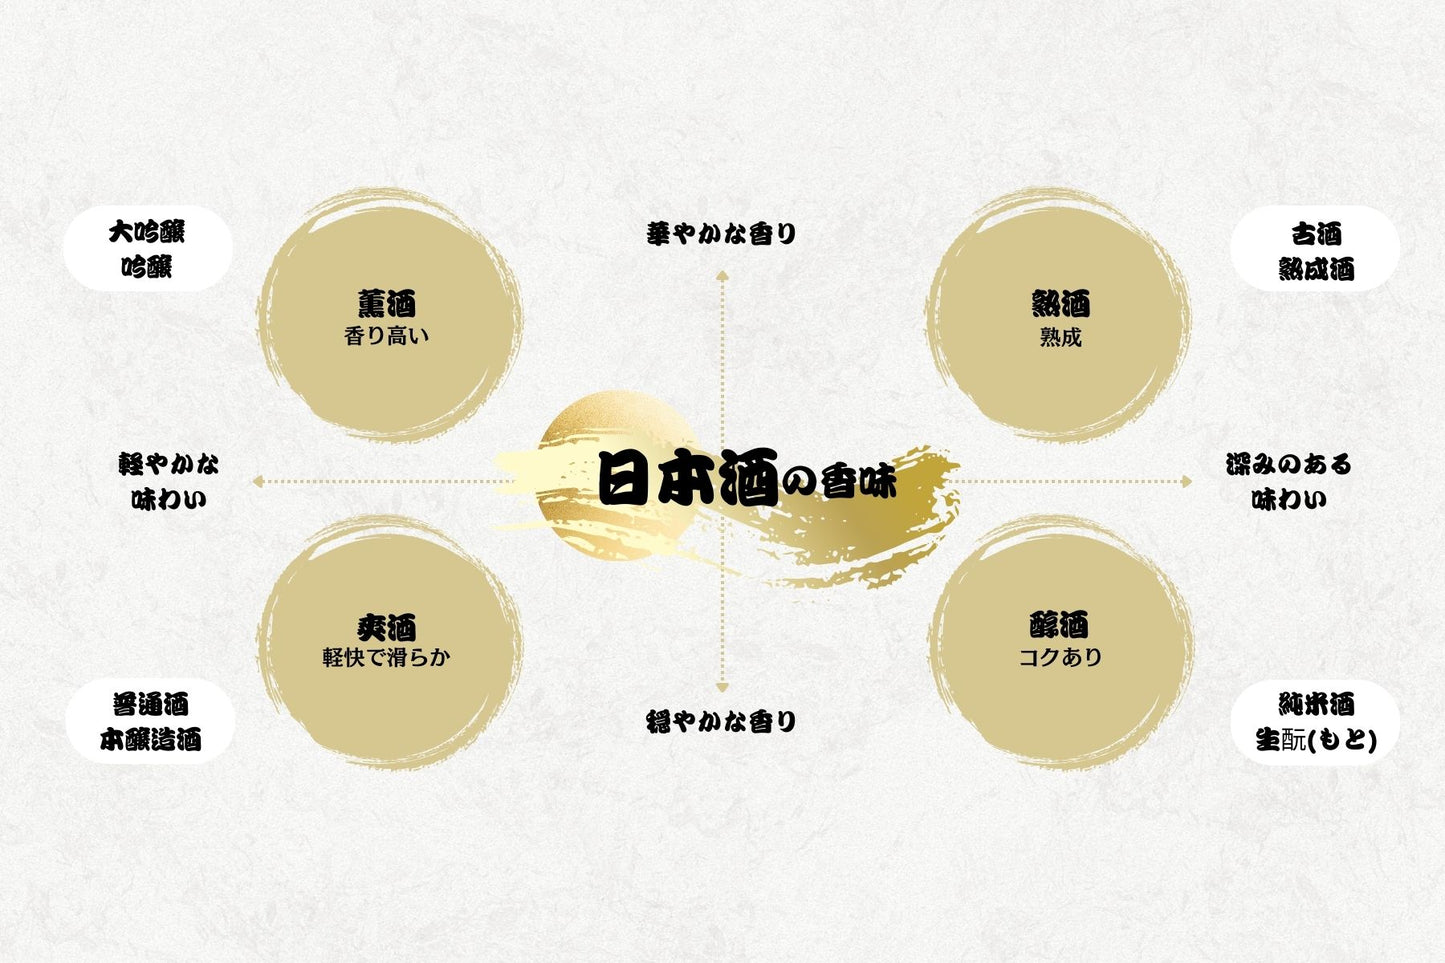 Shirakami Sanchi Four Seasons Special Pure Rice Sake 720ml (52006)